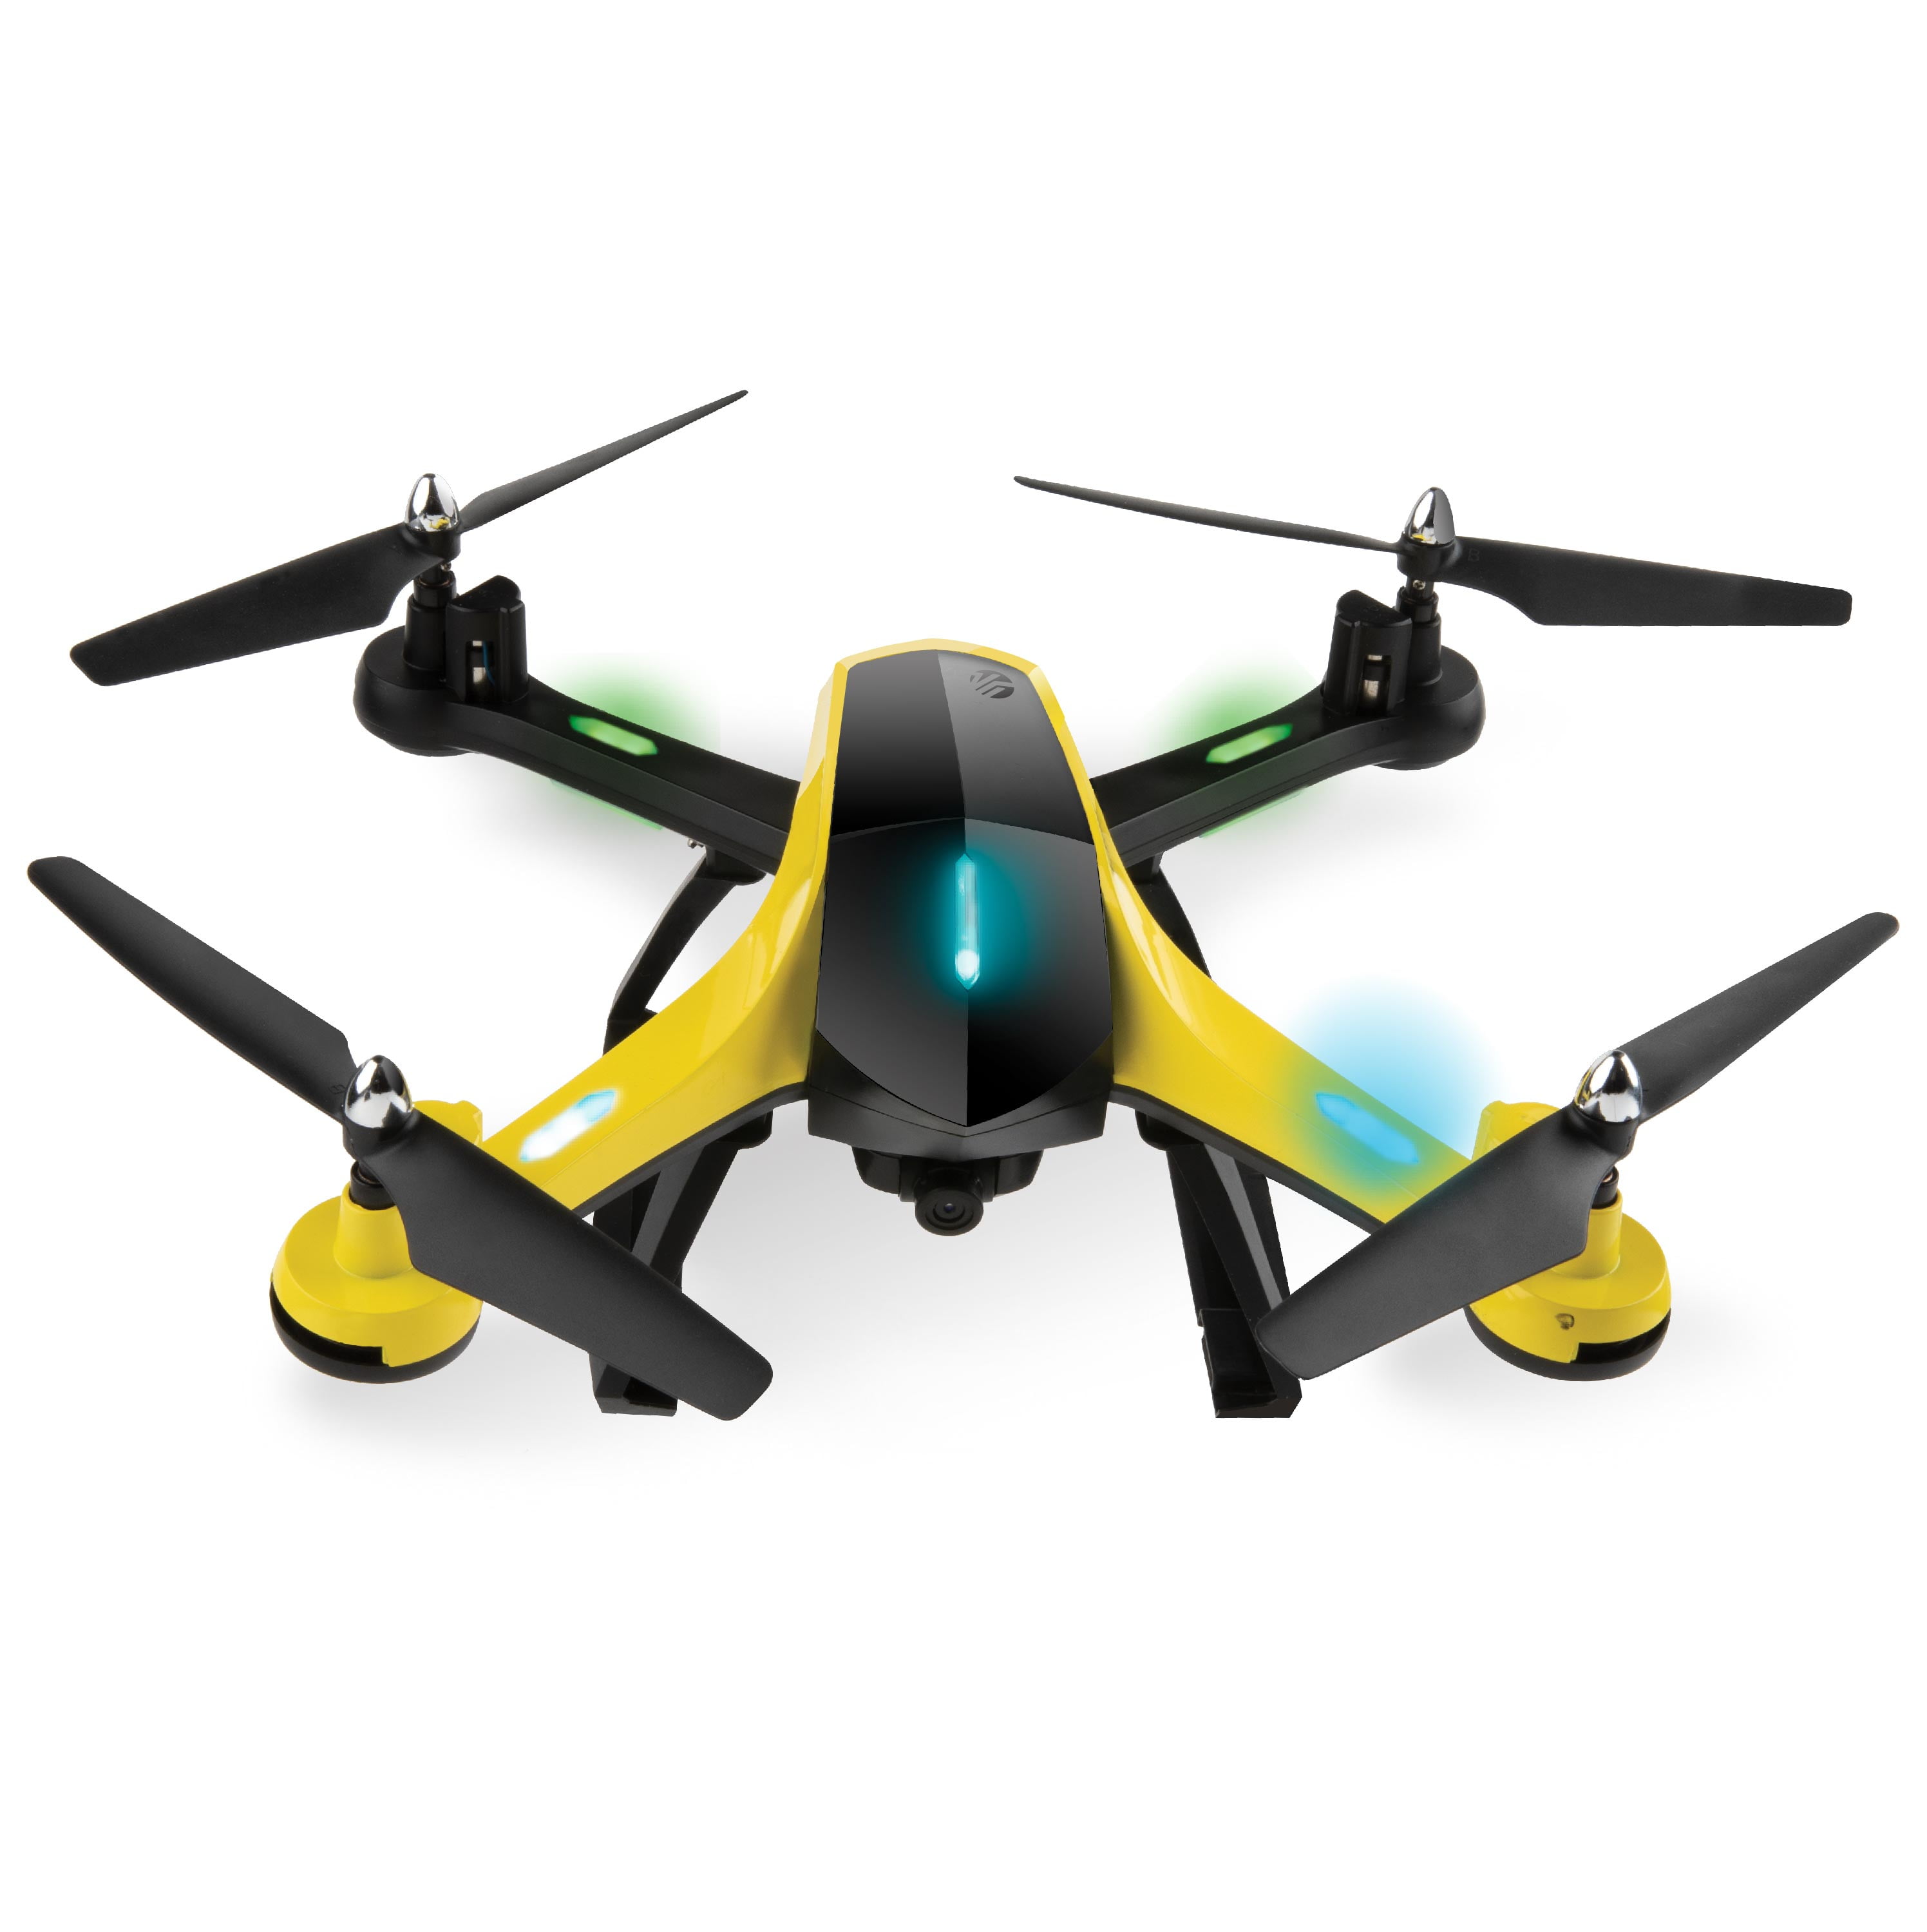 genstand afstemning glas Vivitar VTI Skytracker GPS Aerial Camera Drone, 1000ft Range, Live  Streaming, Black and Yellow, sized 12" x 5" x 11.5" - Walmart.com